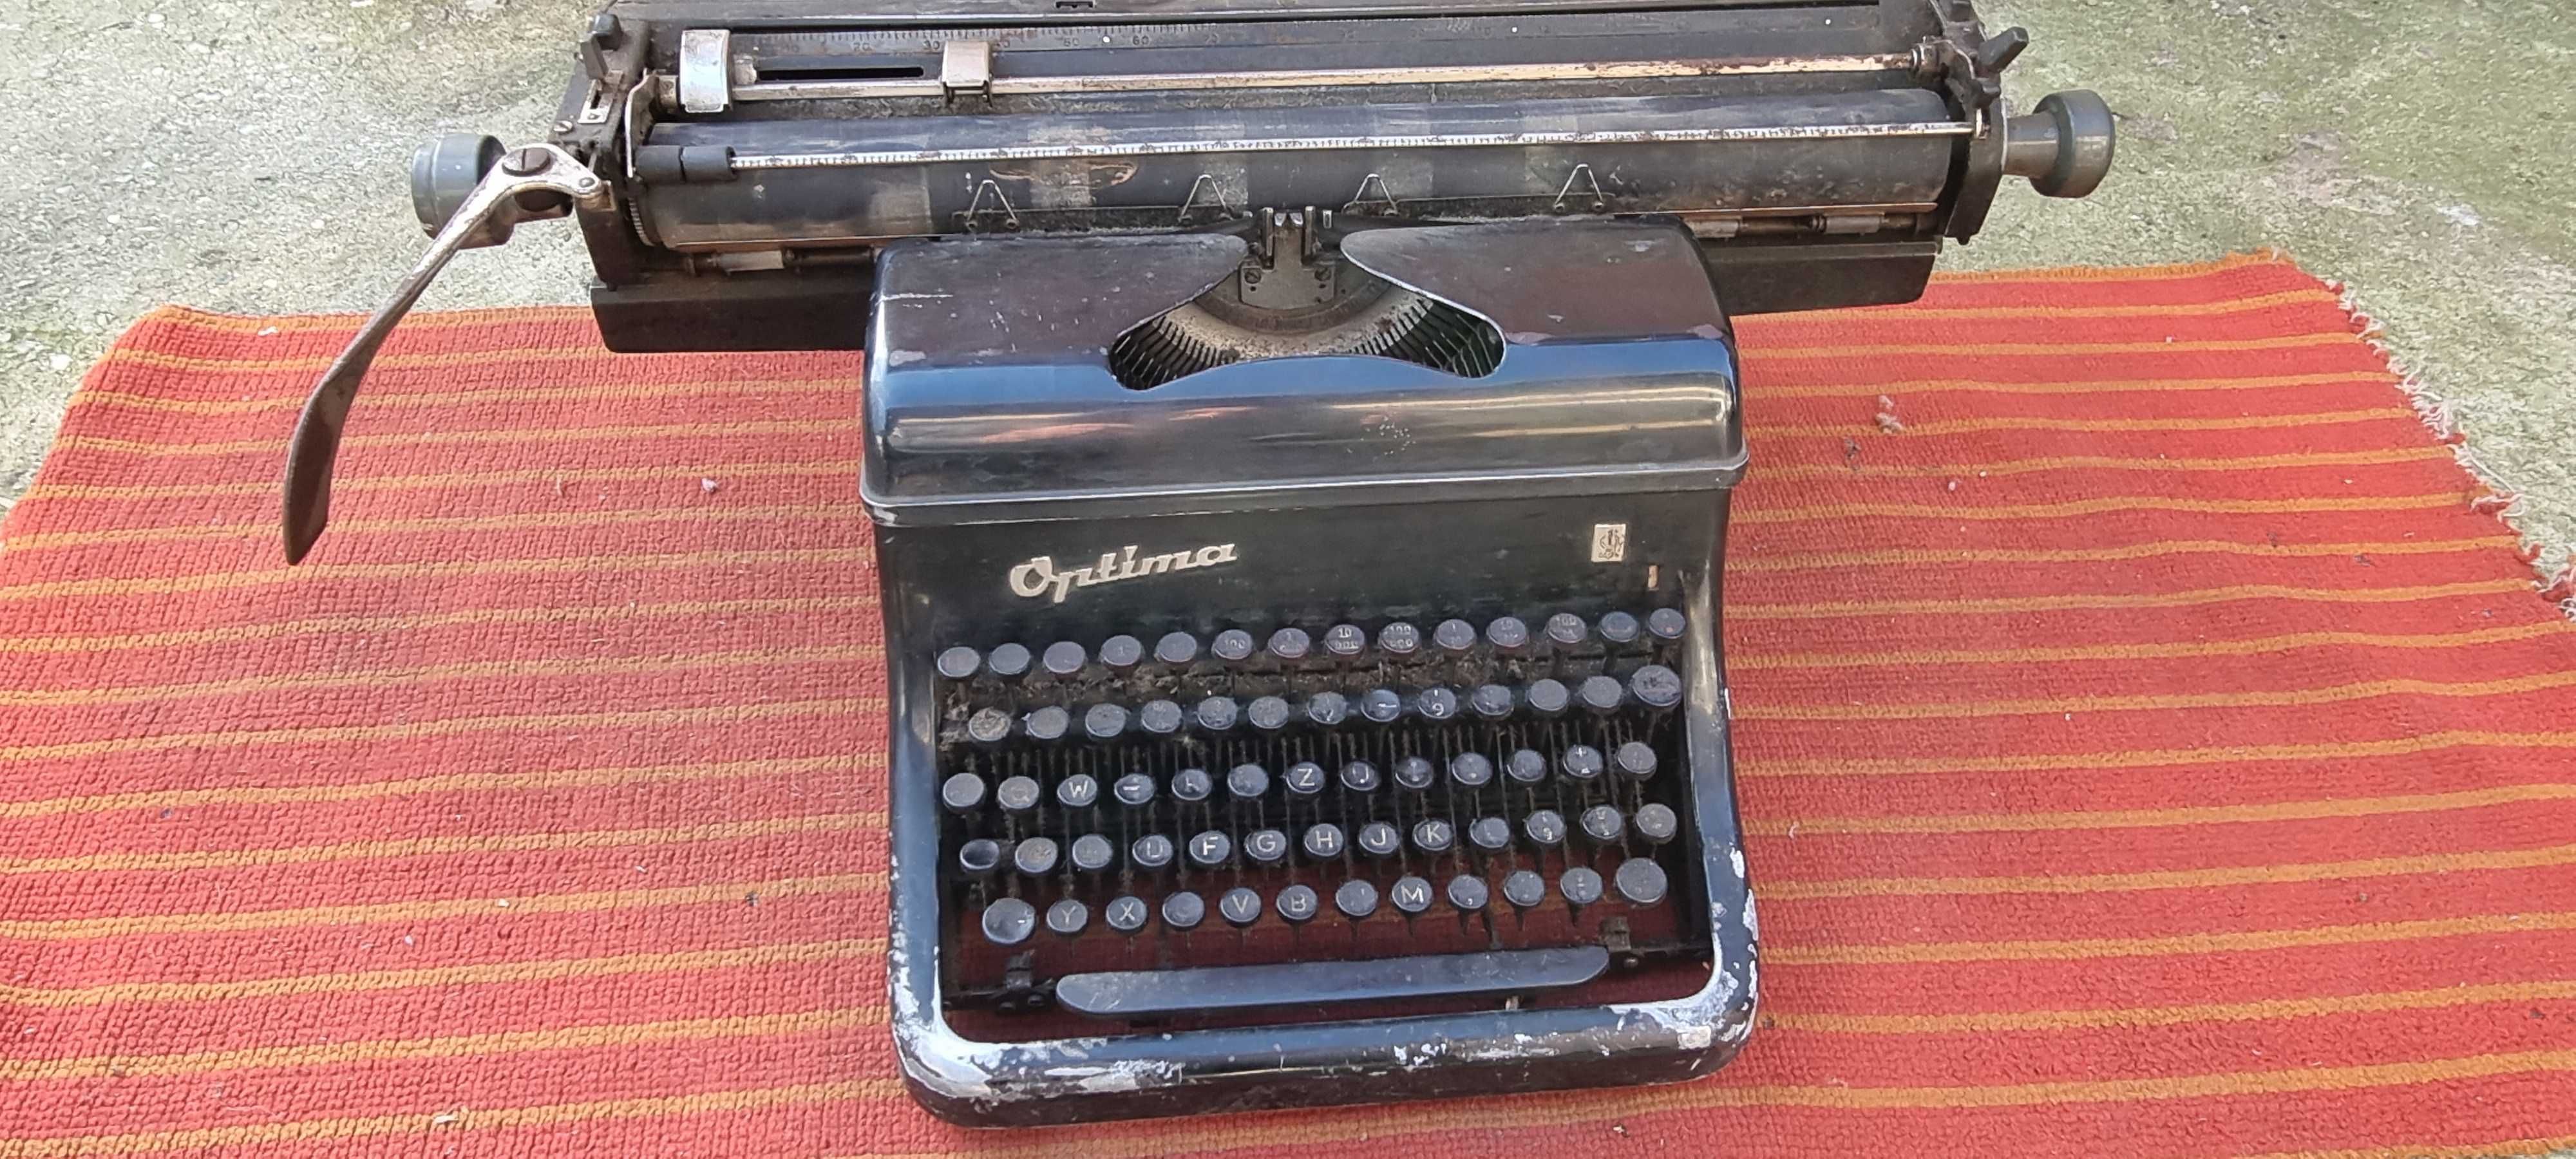 Masina de scris Optima